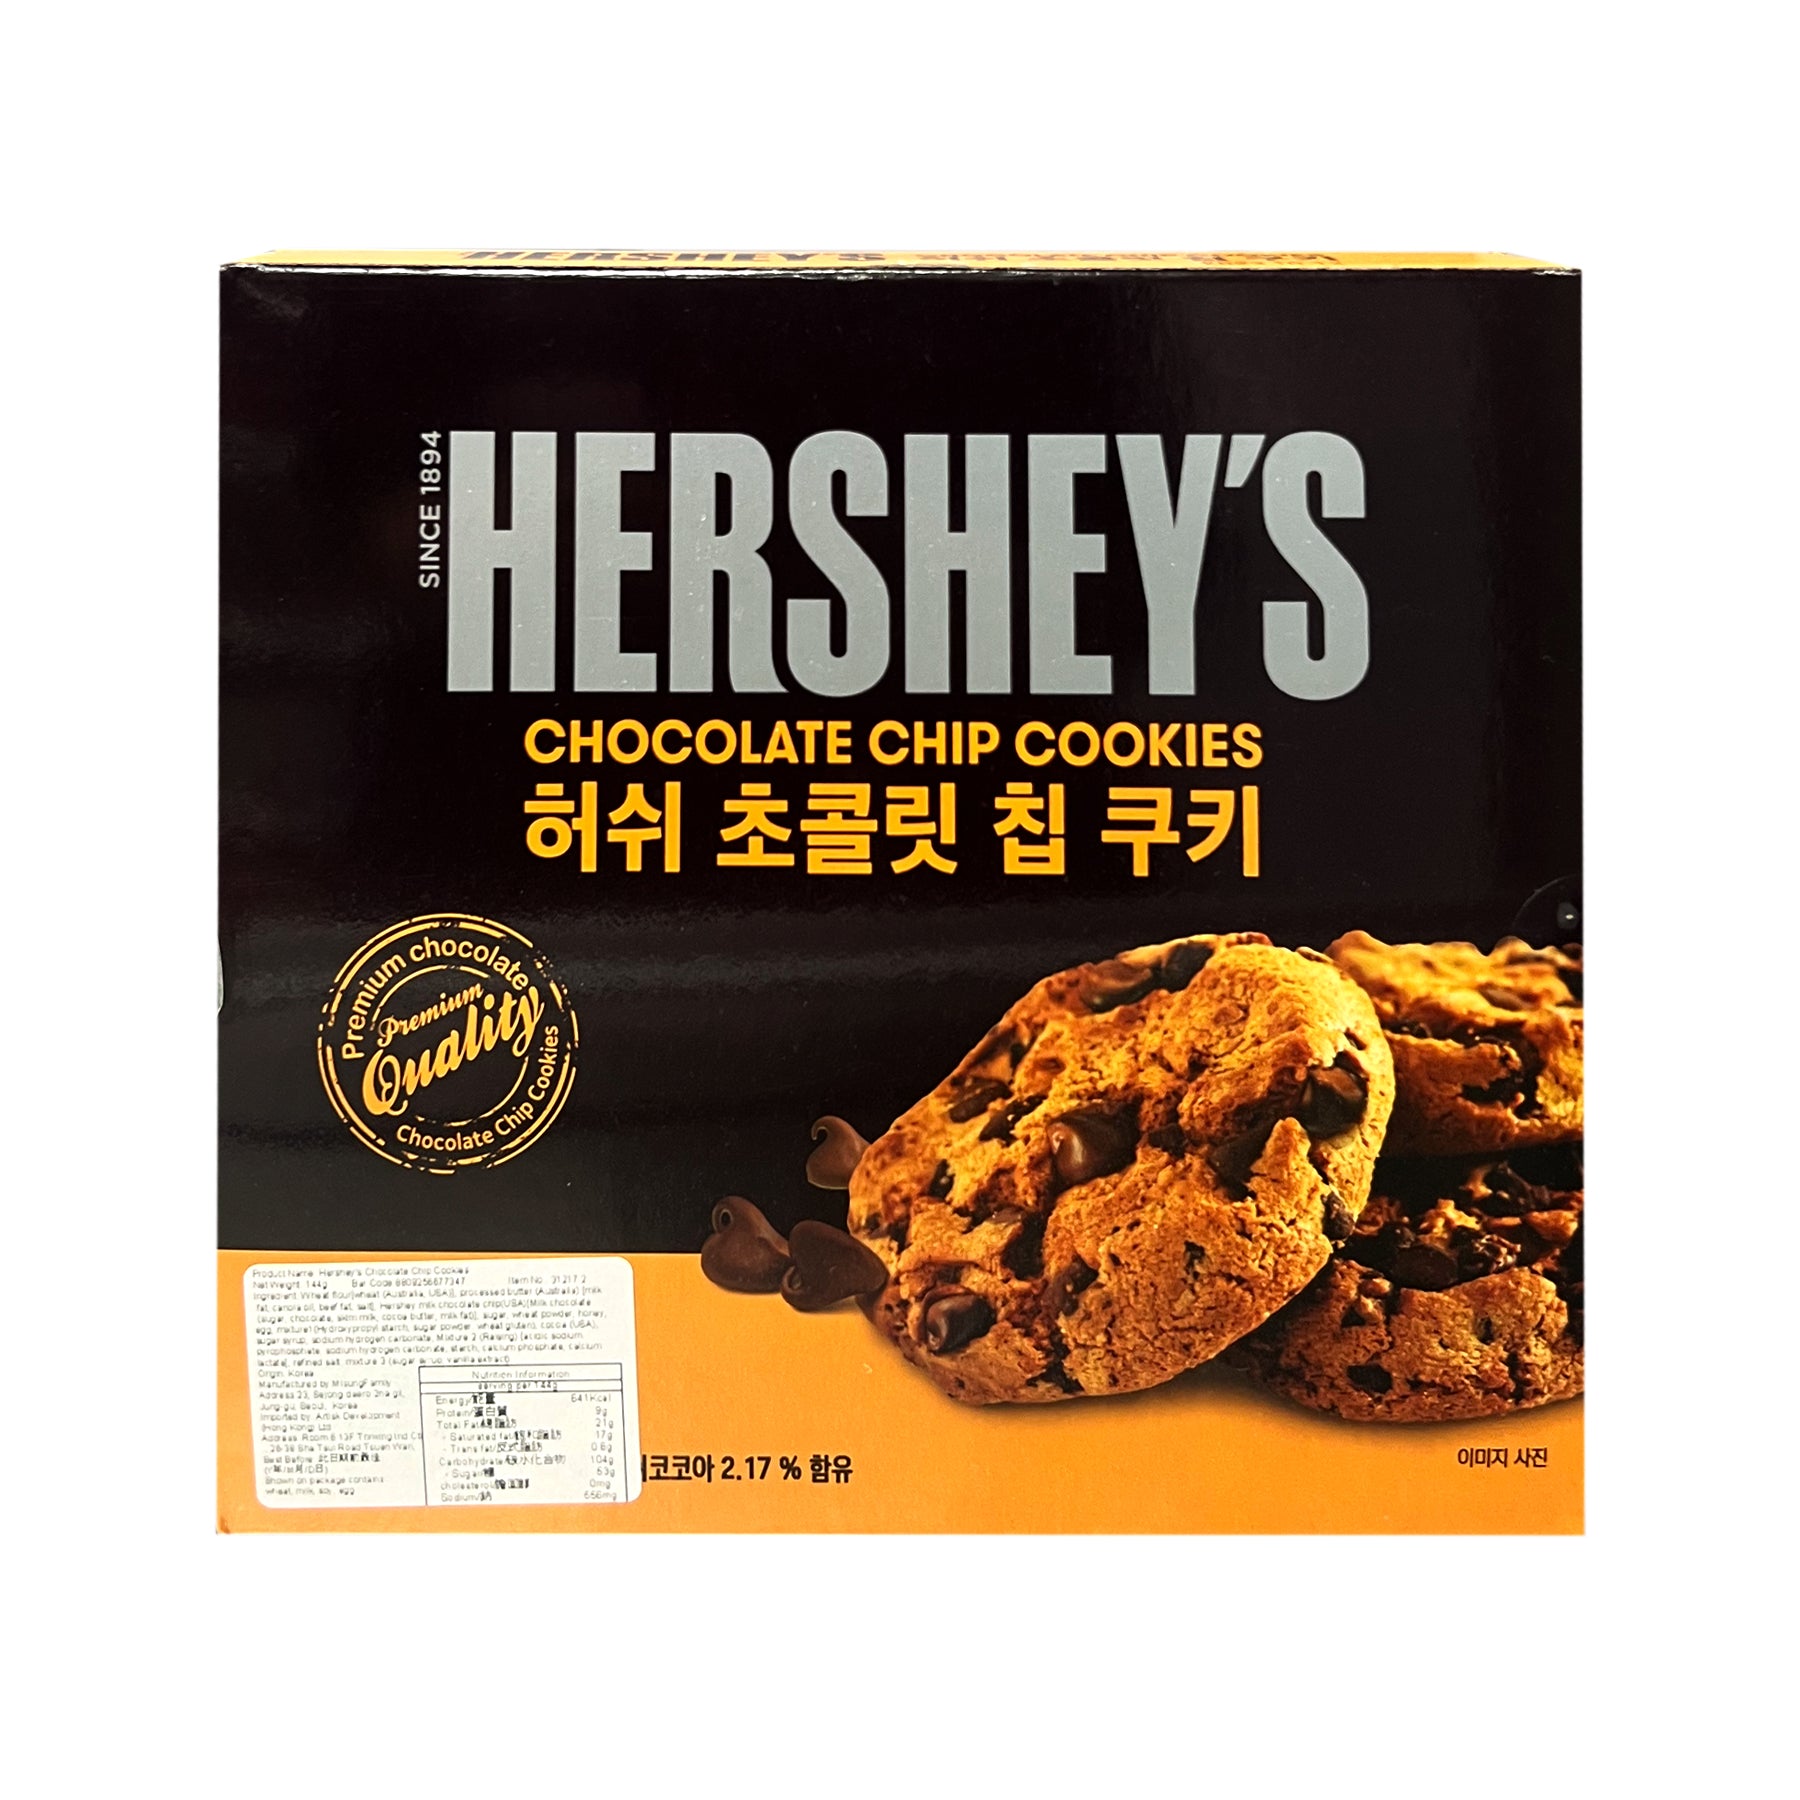 HERSHEY'S Chocolate Chip Cookie 12g x 12pcs